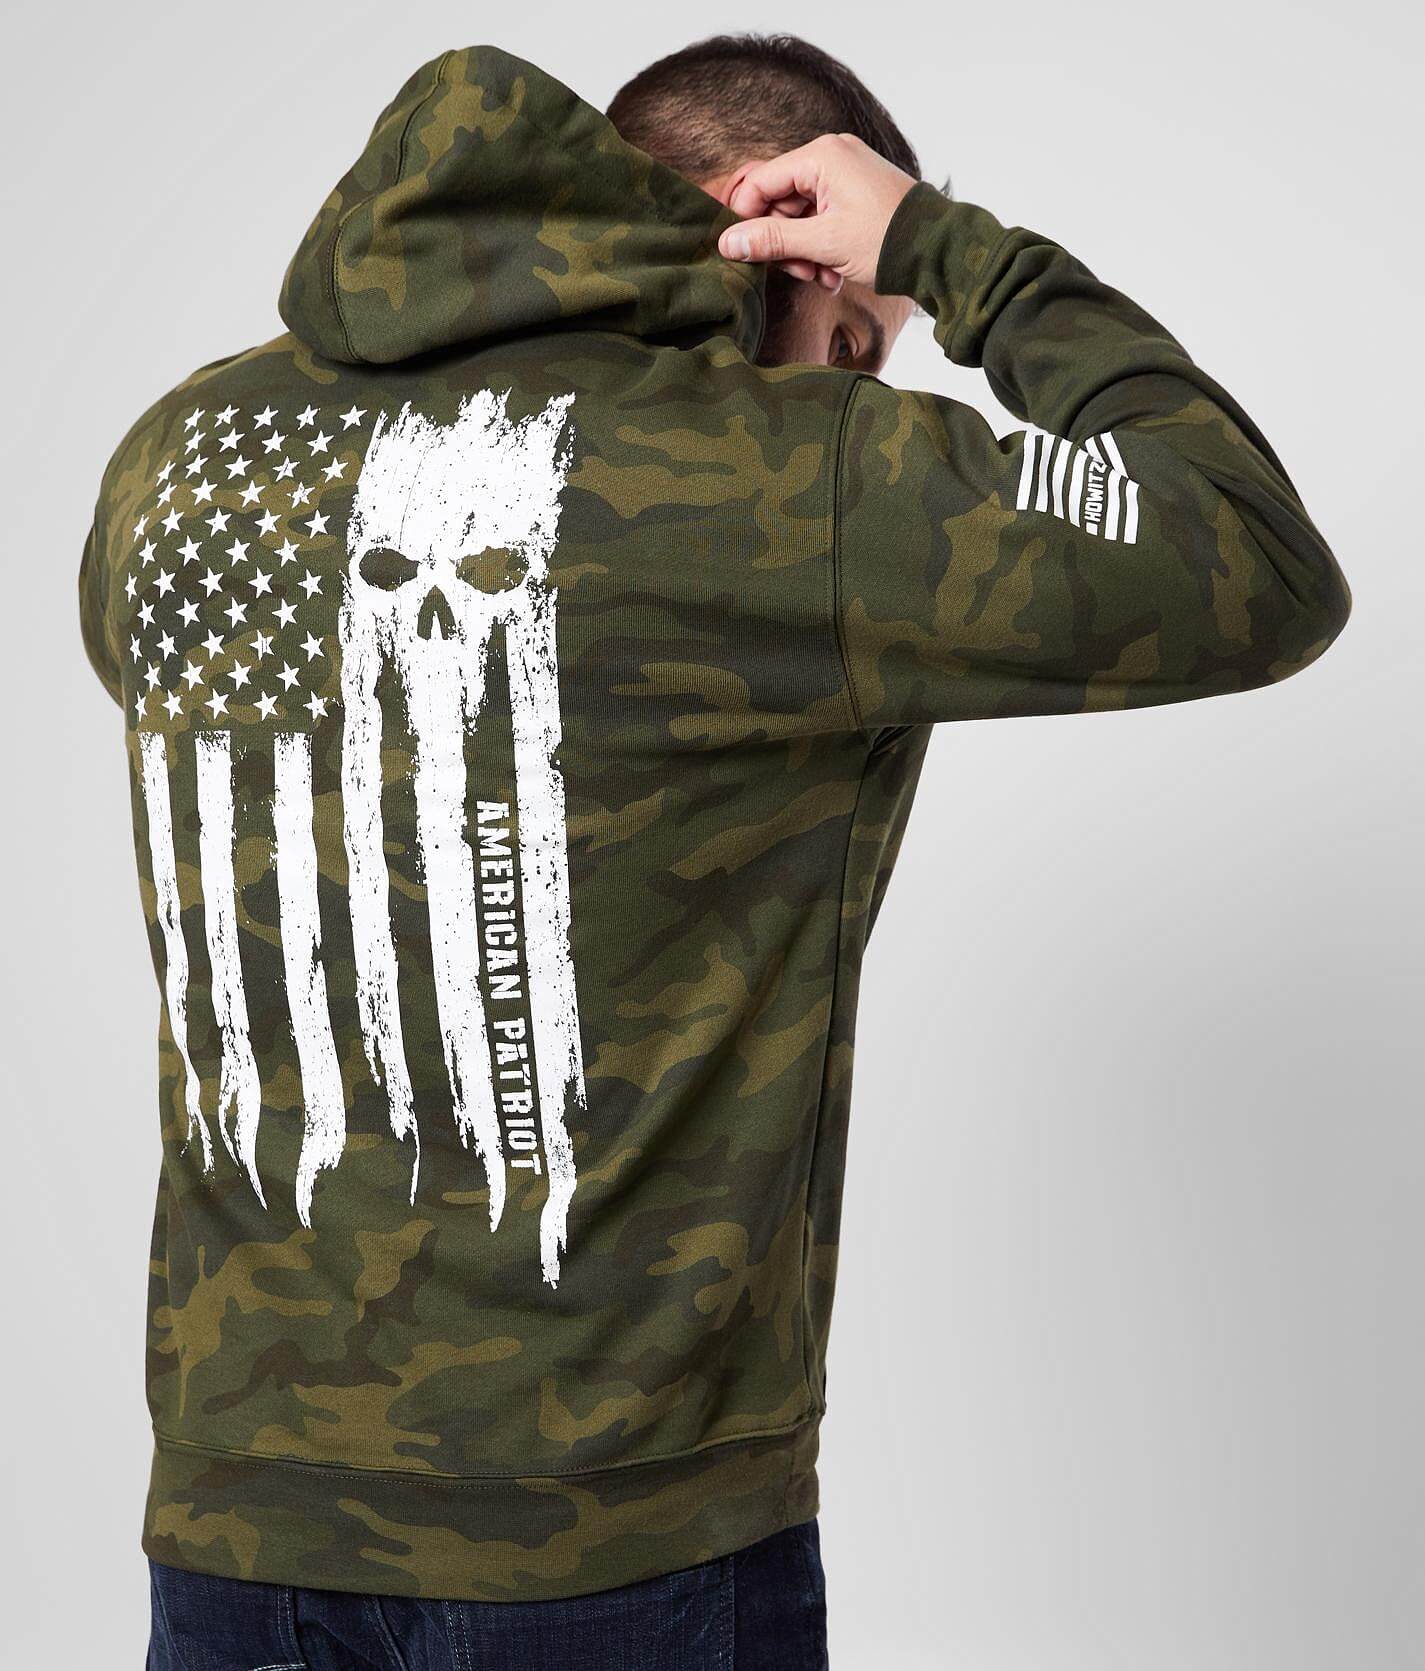 patriots camo hoodie